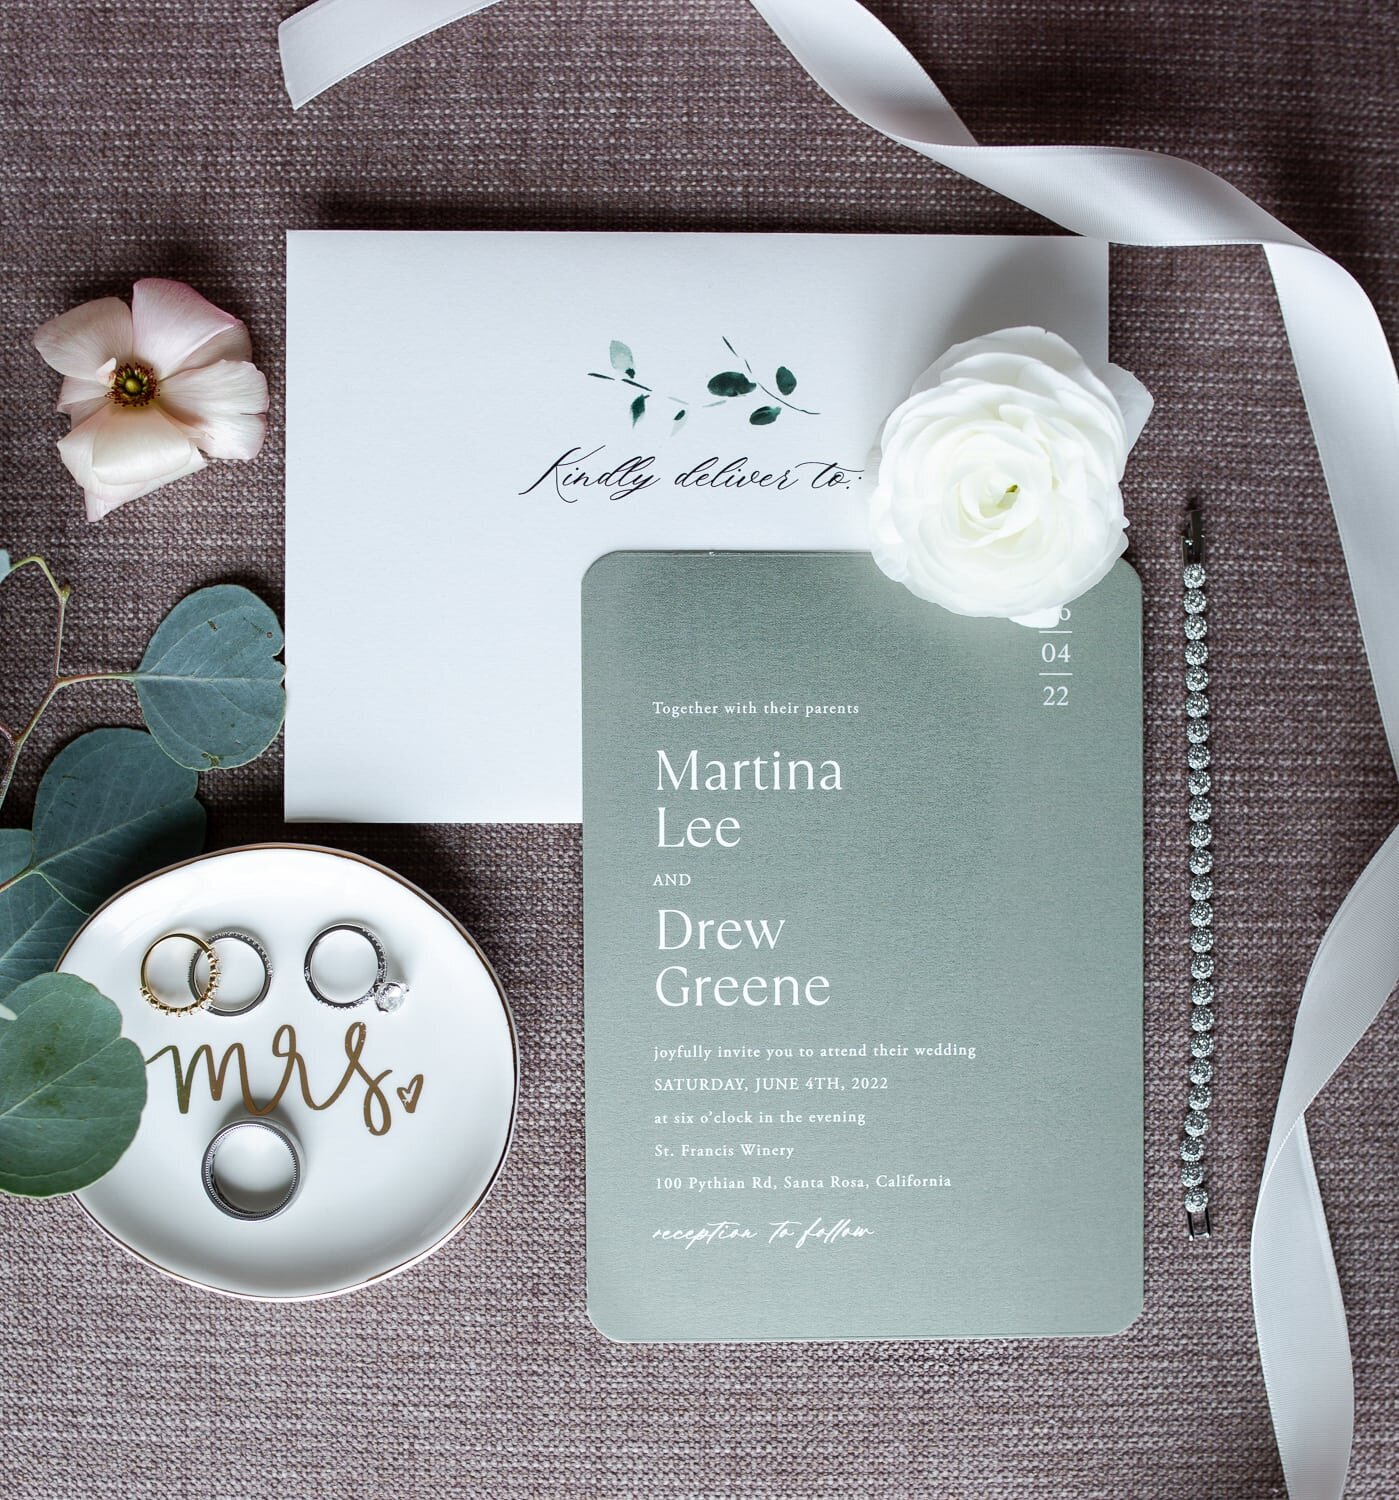 Flatlay, sage and white wedding invitation, white ribbon and bridal jewelry.